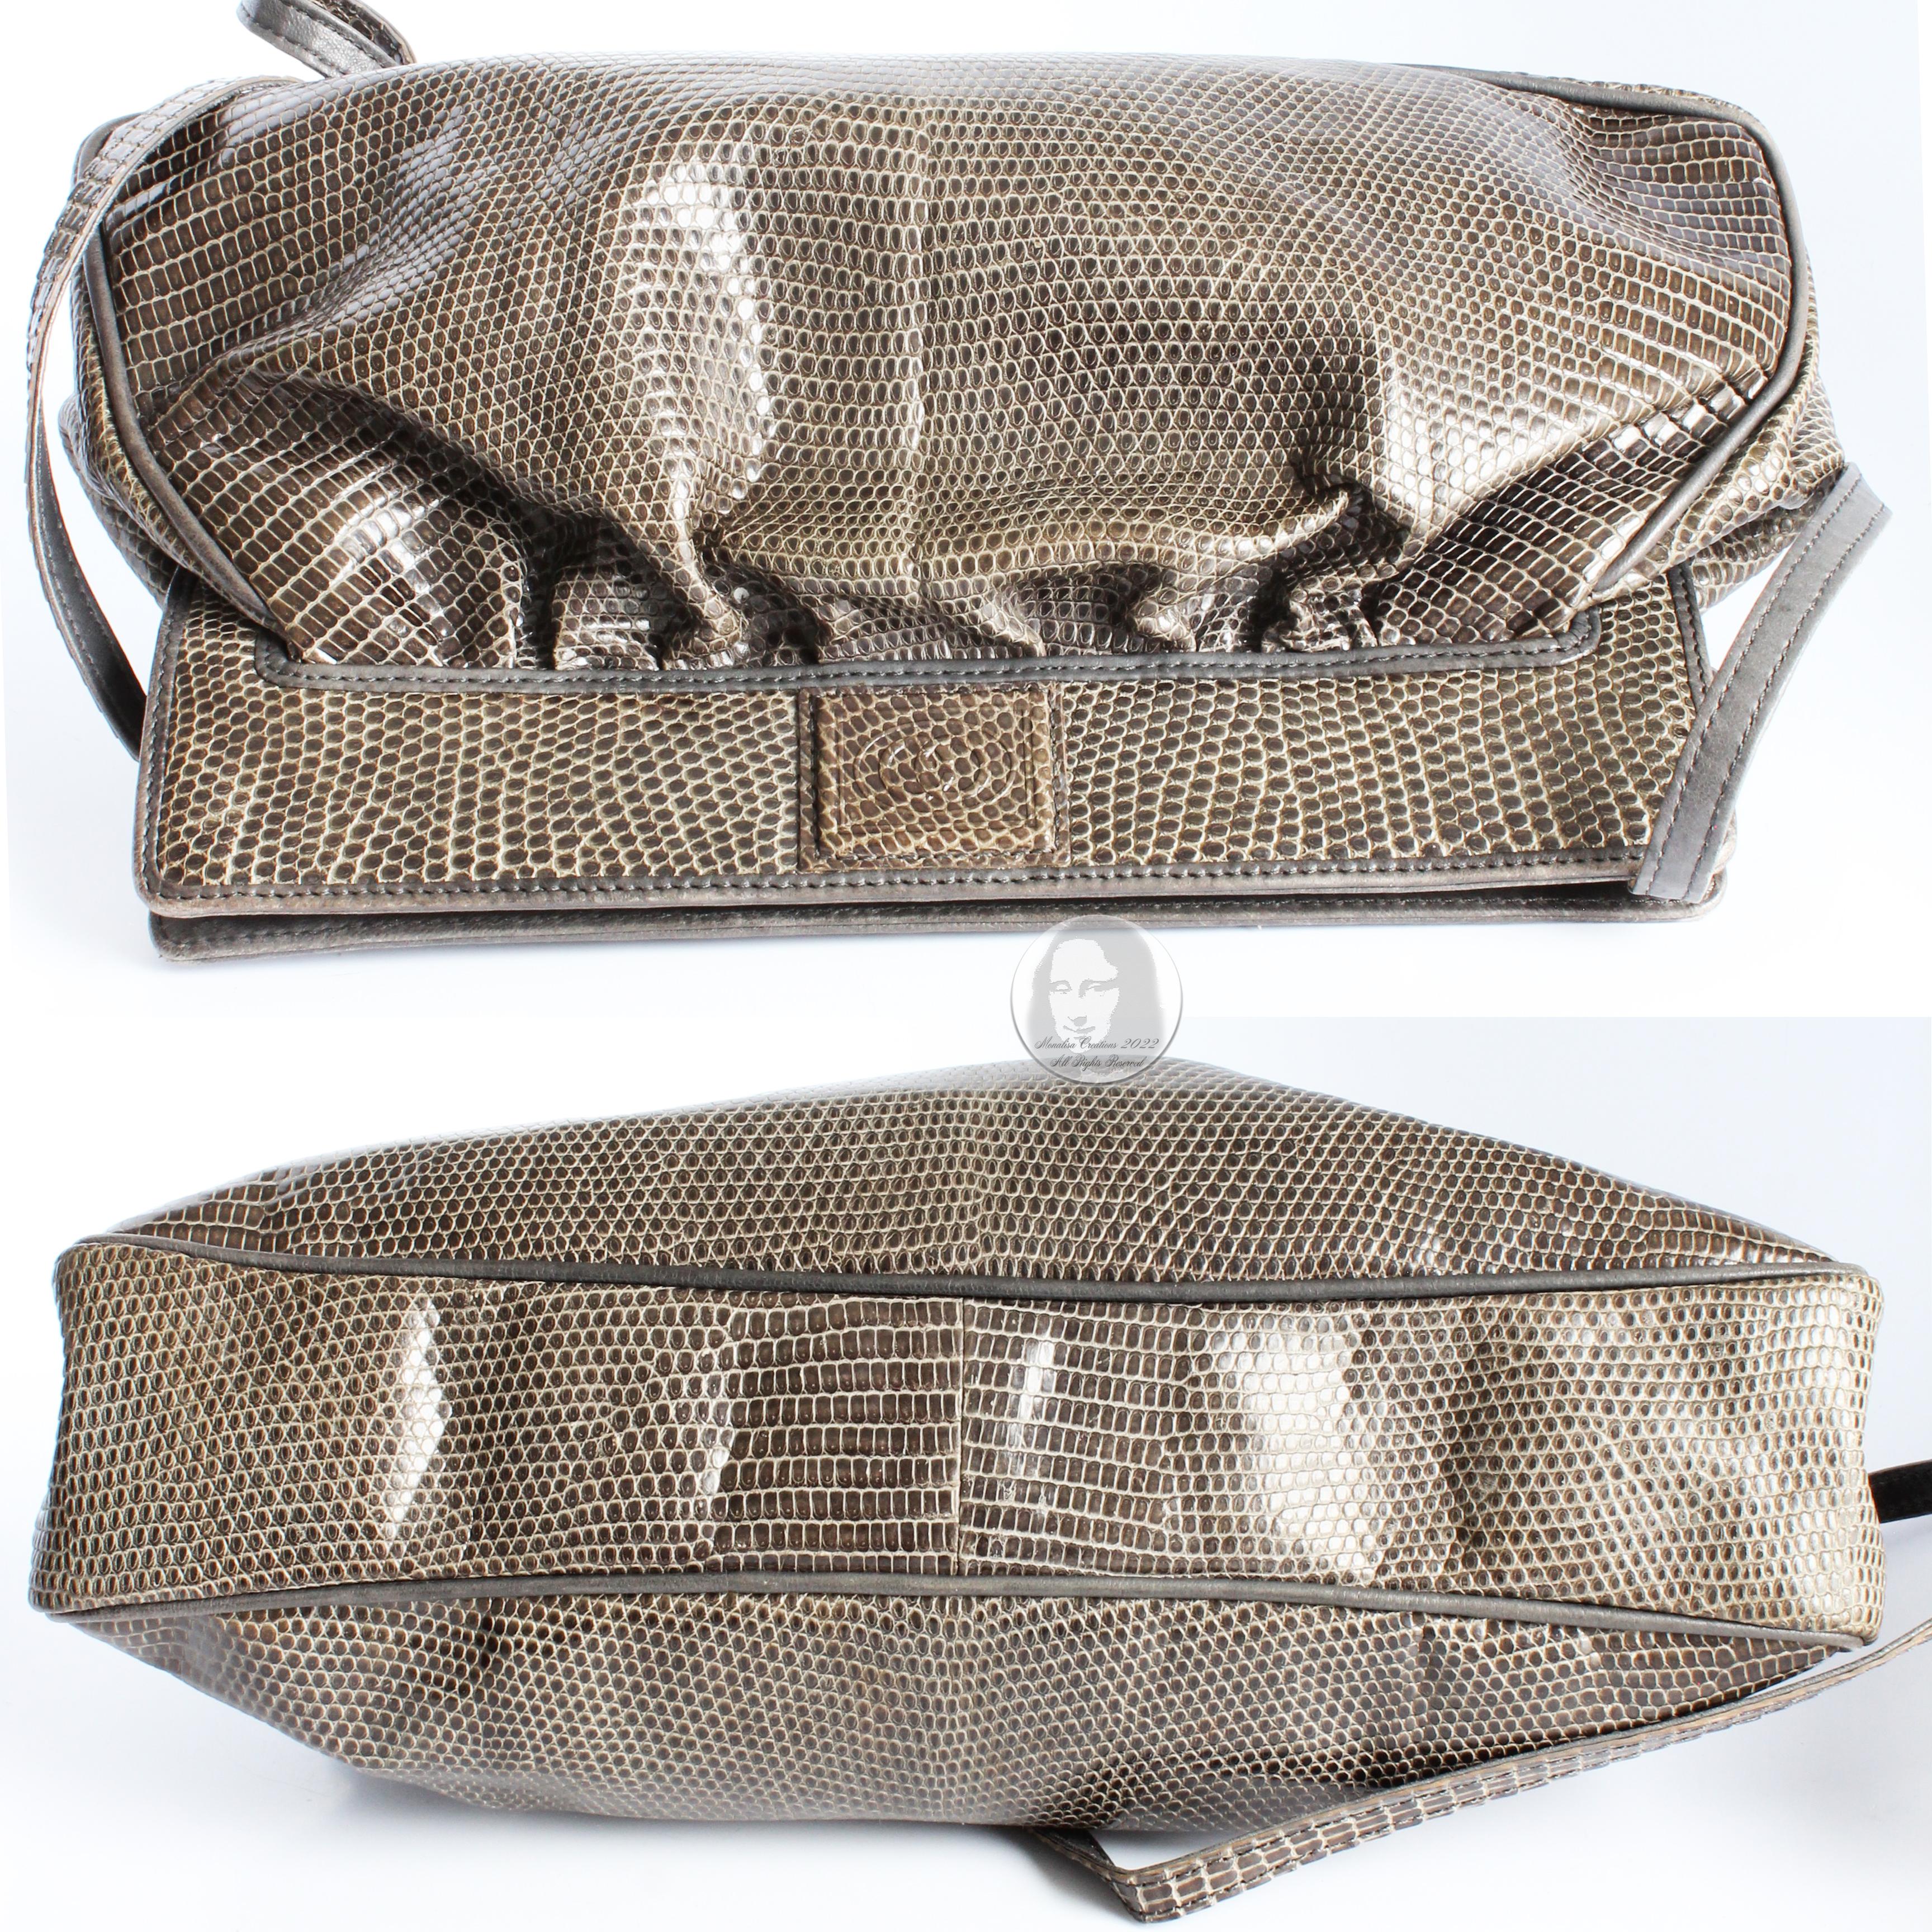 Gucci Lizard Skin Bag Exotic Reptile Clutch Shoulder Crossbody Bag Vintage Rare  2